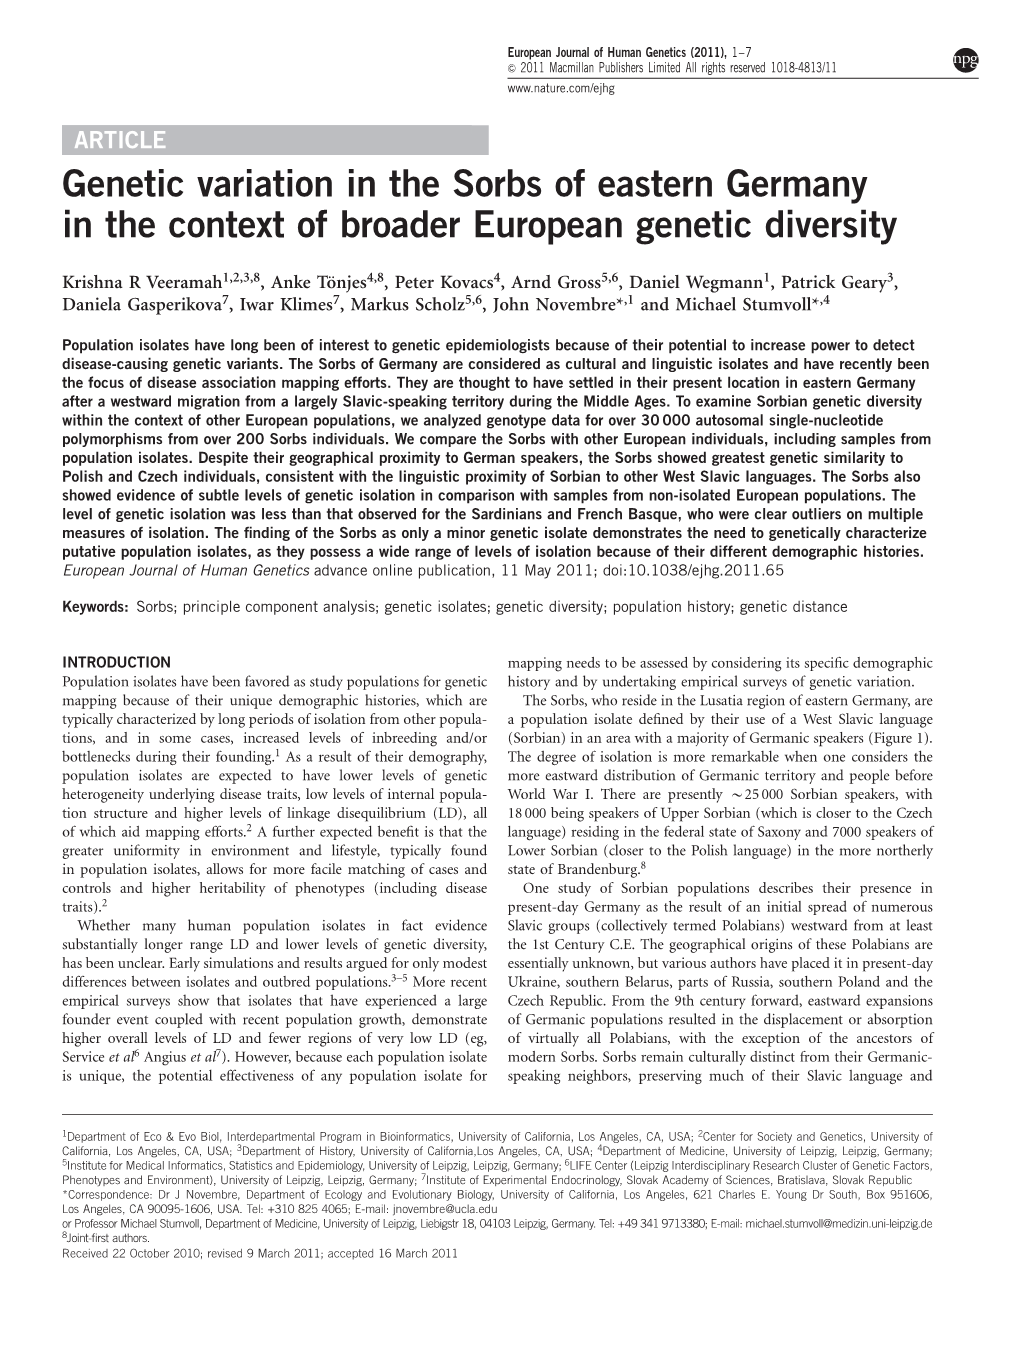 Genetic Variation in the Sorbs of Eastern Germany in the Context of Broader European Genetic Diversity